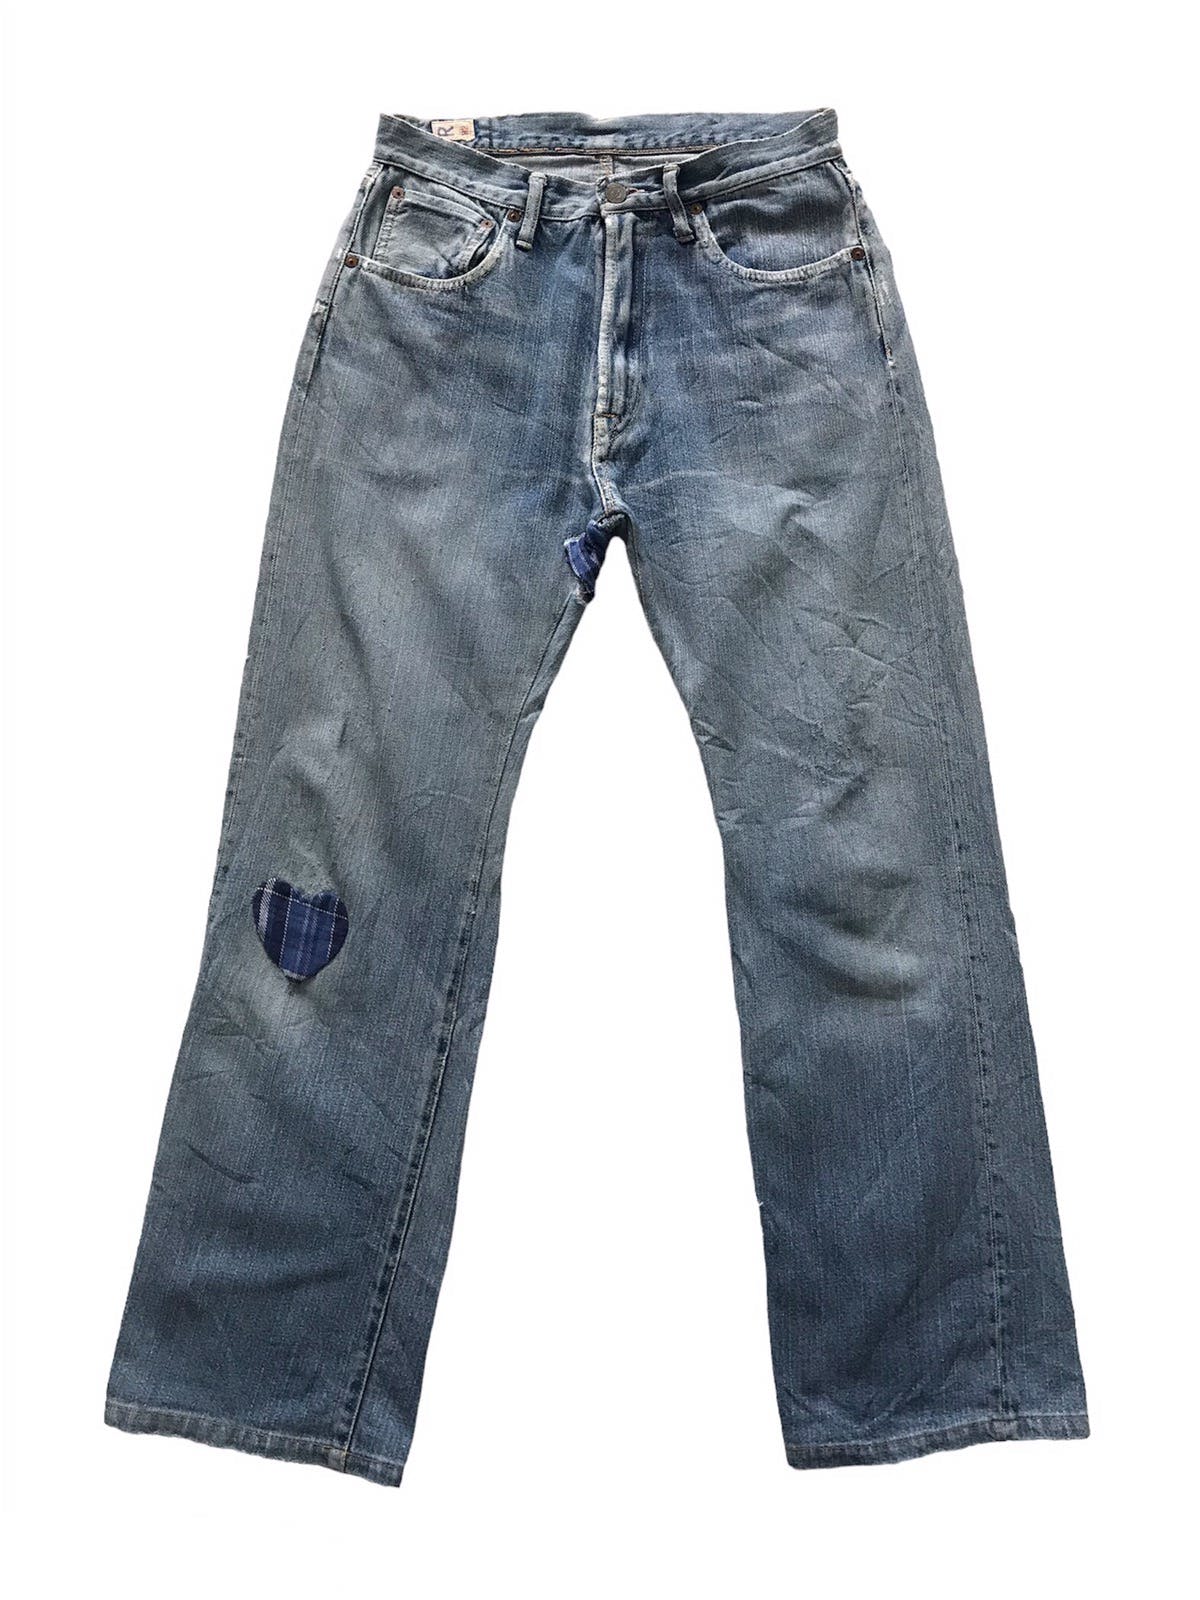 45rpm - Distress R 45 Rpm Denim Jeans Pant - 1